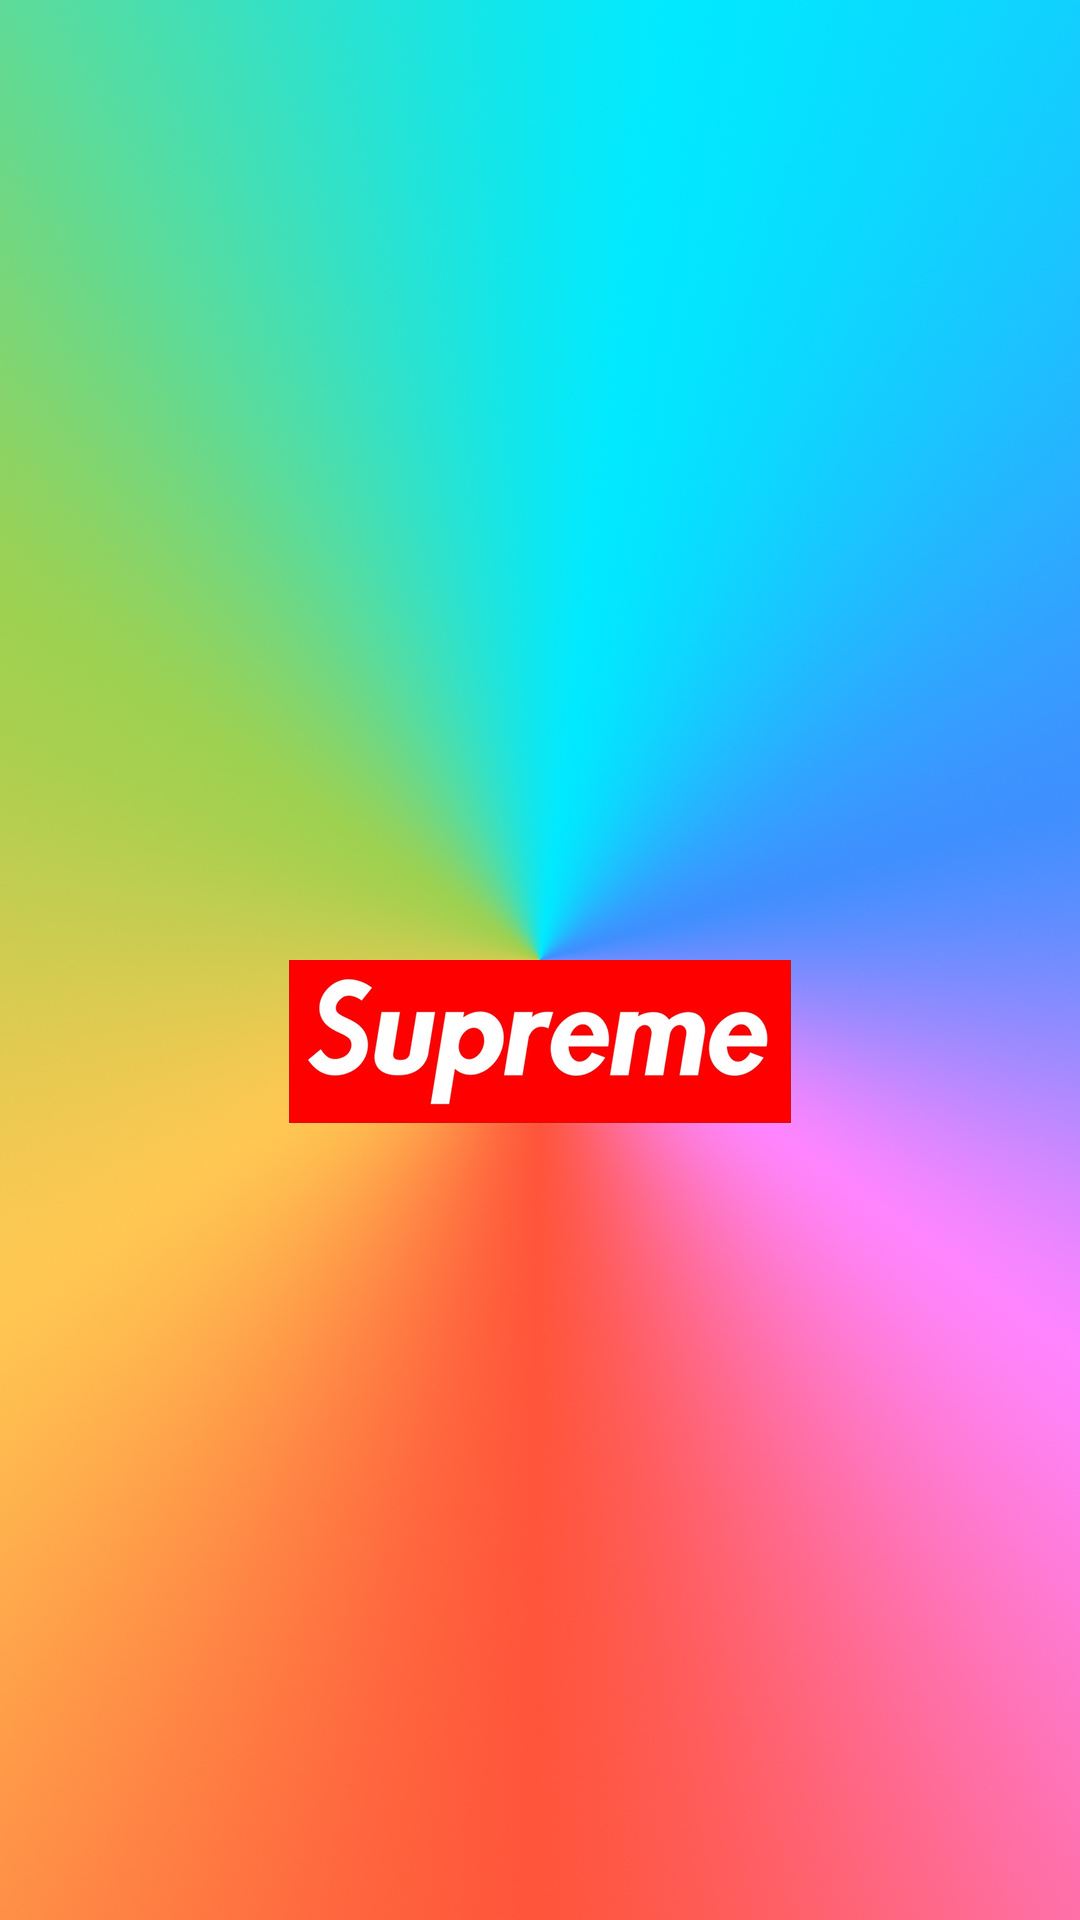 supreme07 - Supreme[シュプリーム]の高画質スマホ壁紙23枚 [iPhone＆Androidに対応]